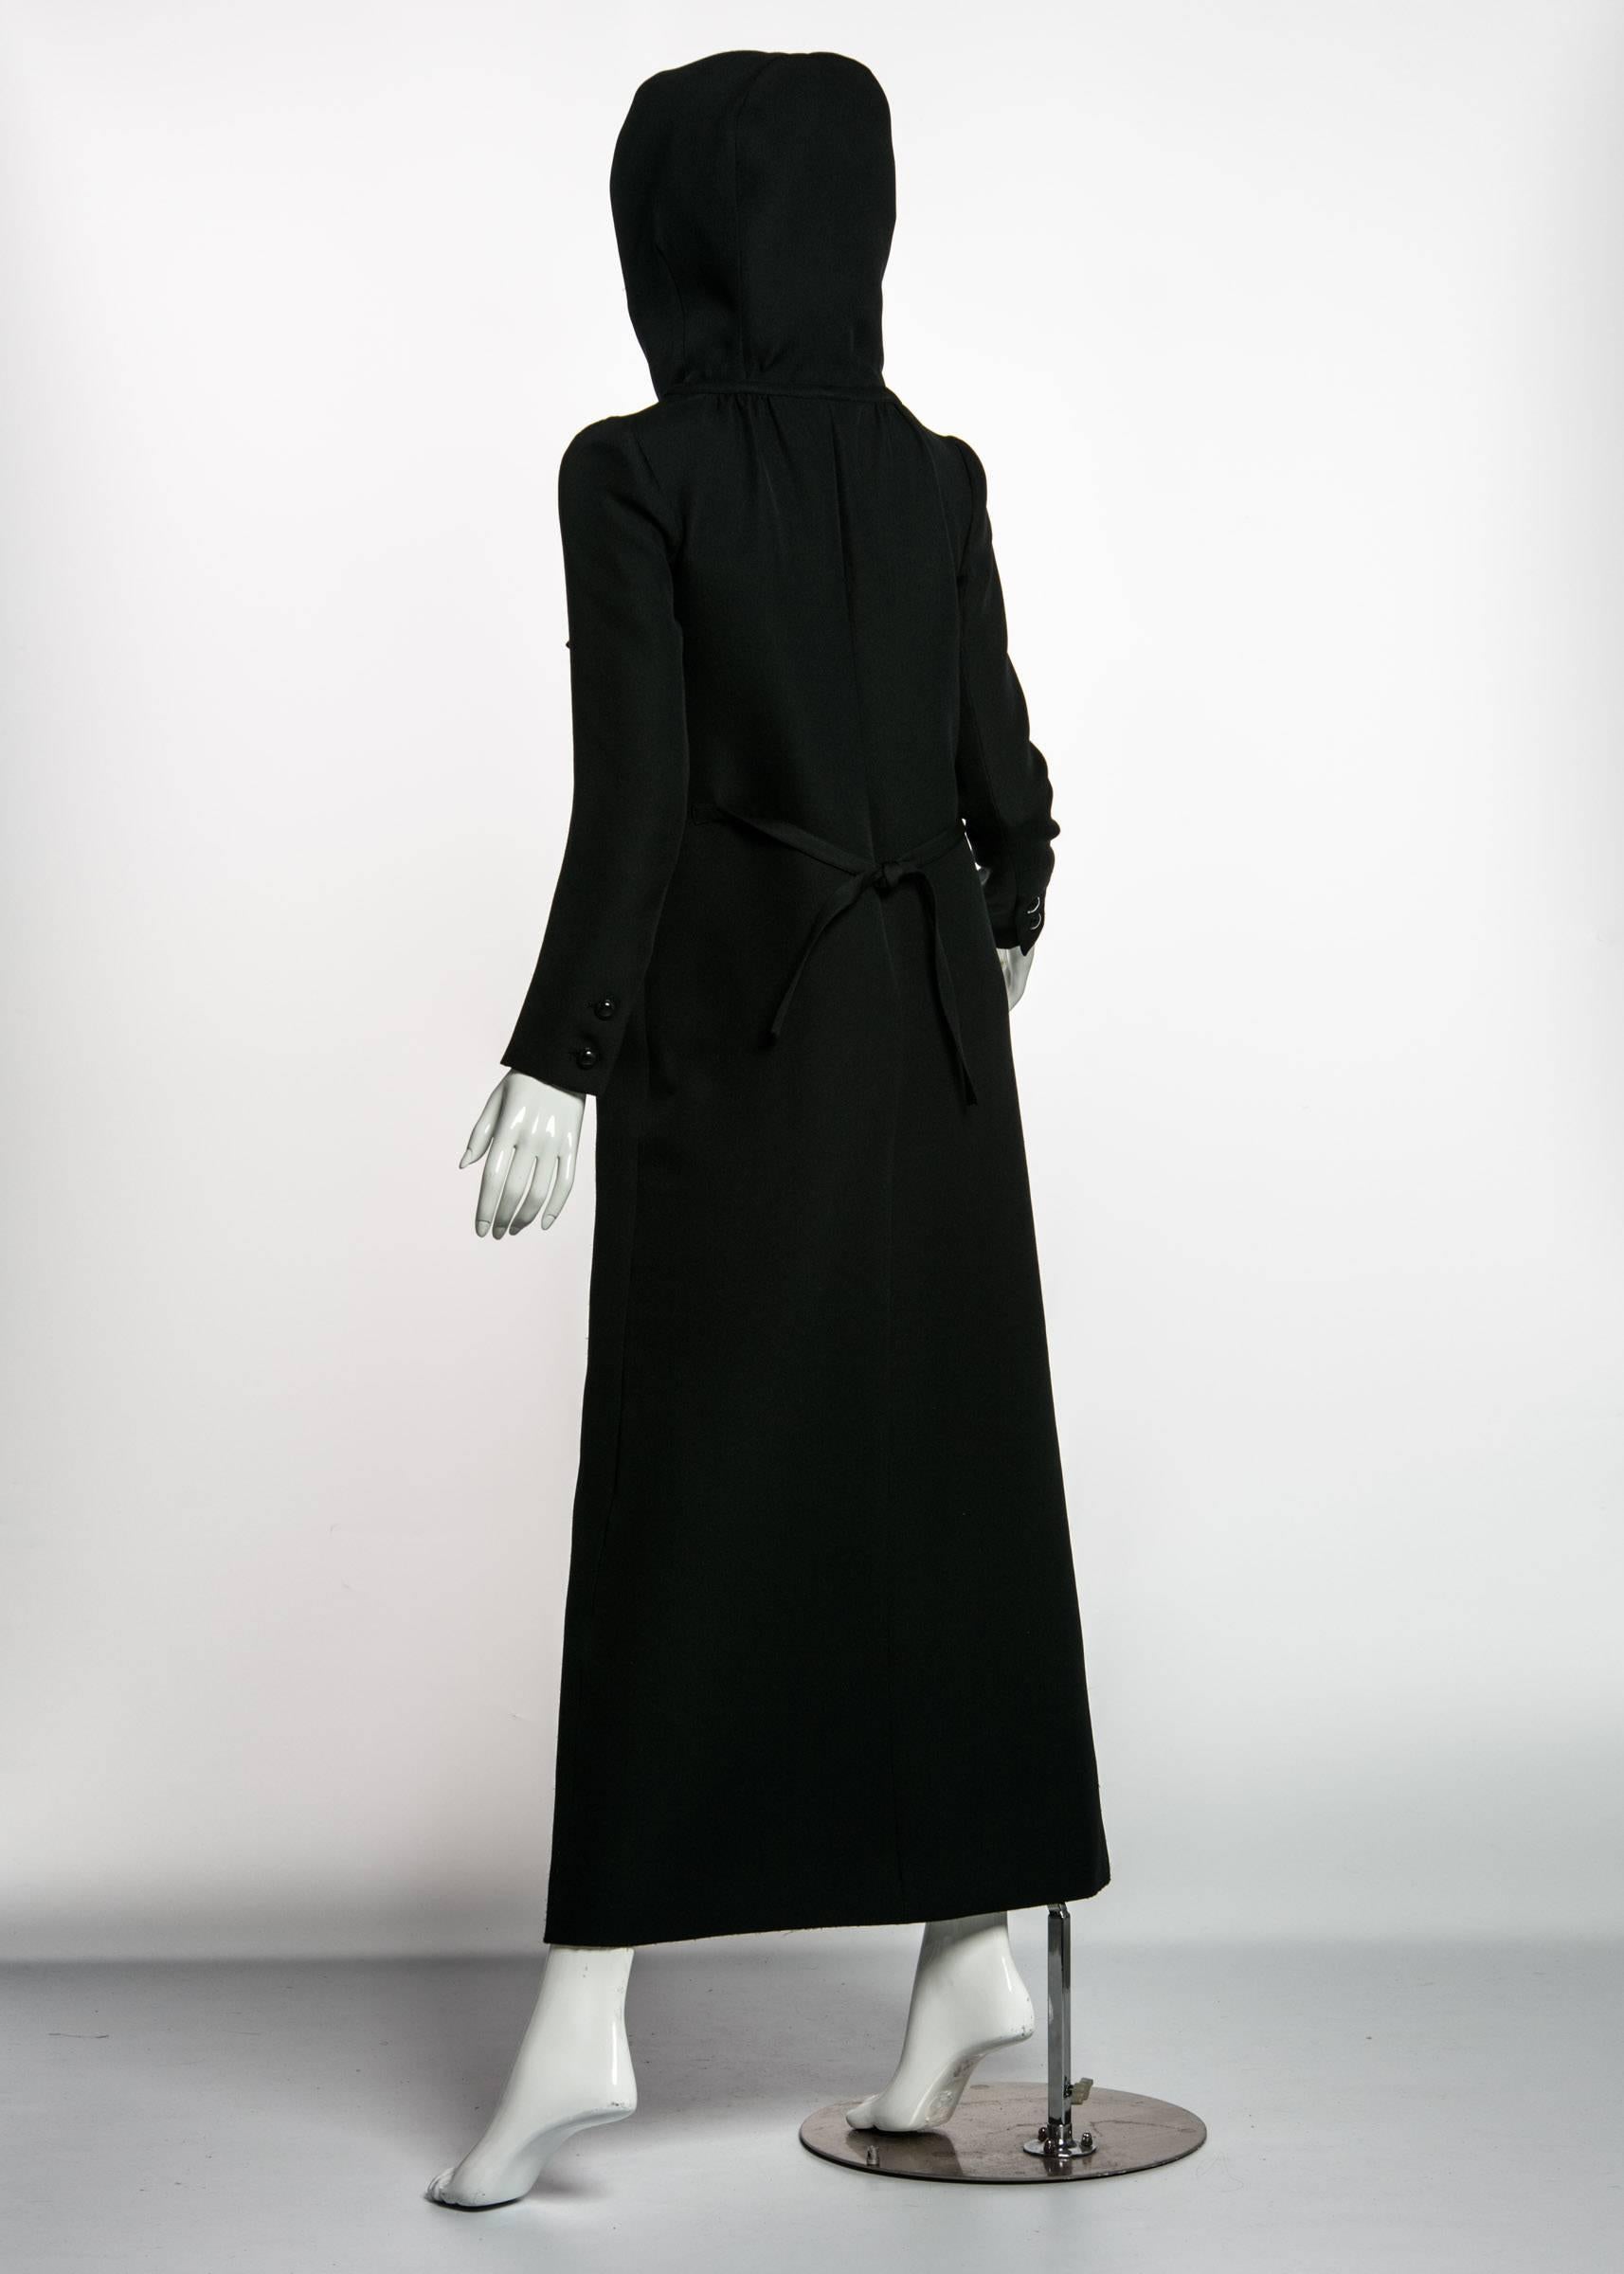 1960s Courrѐges Paris Mod Black Maxi Coat with Hood 2